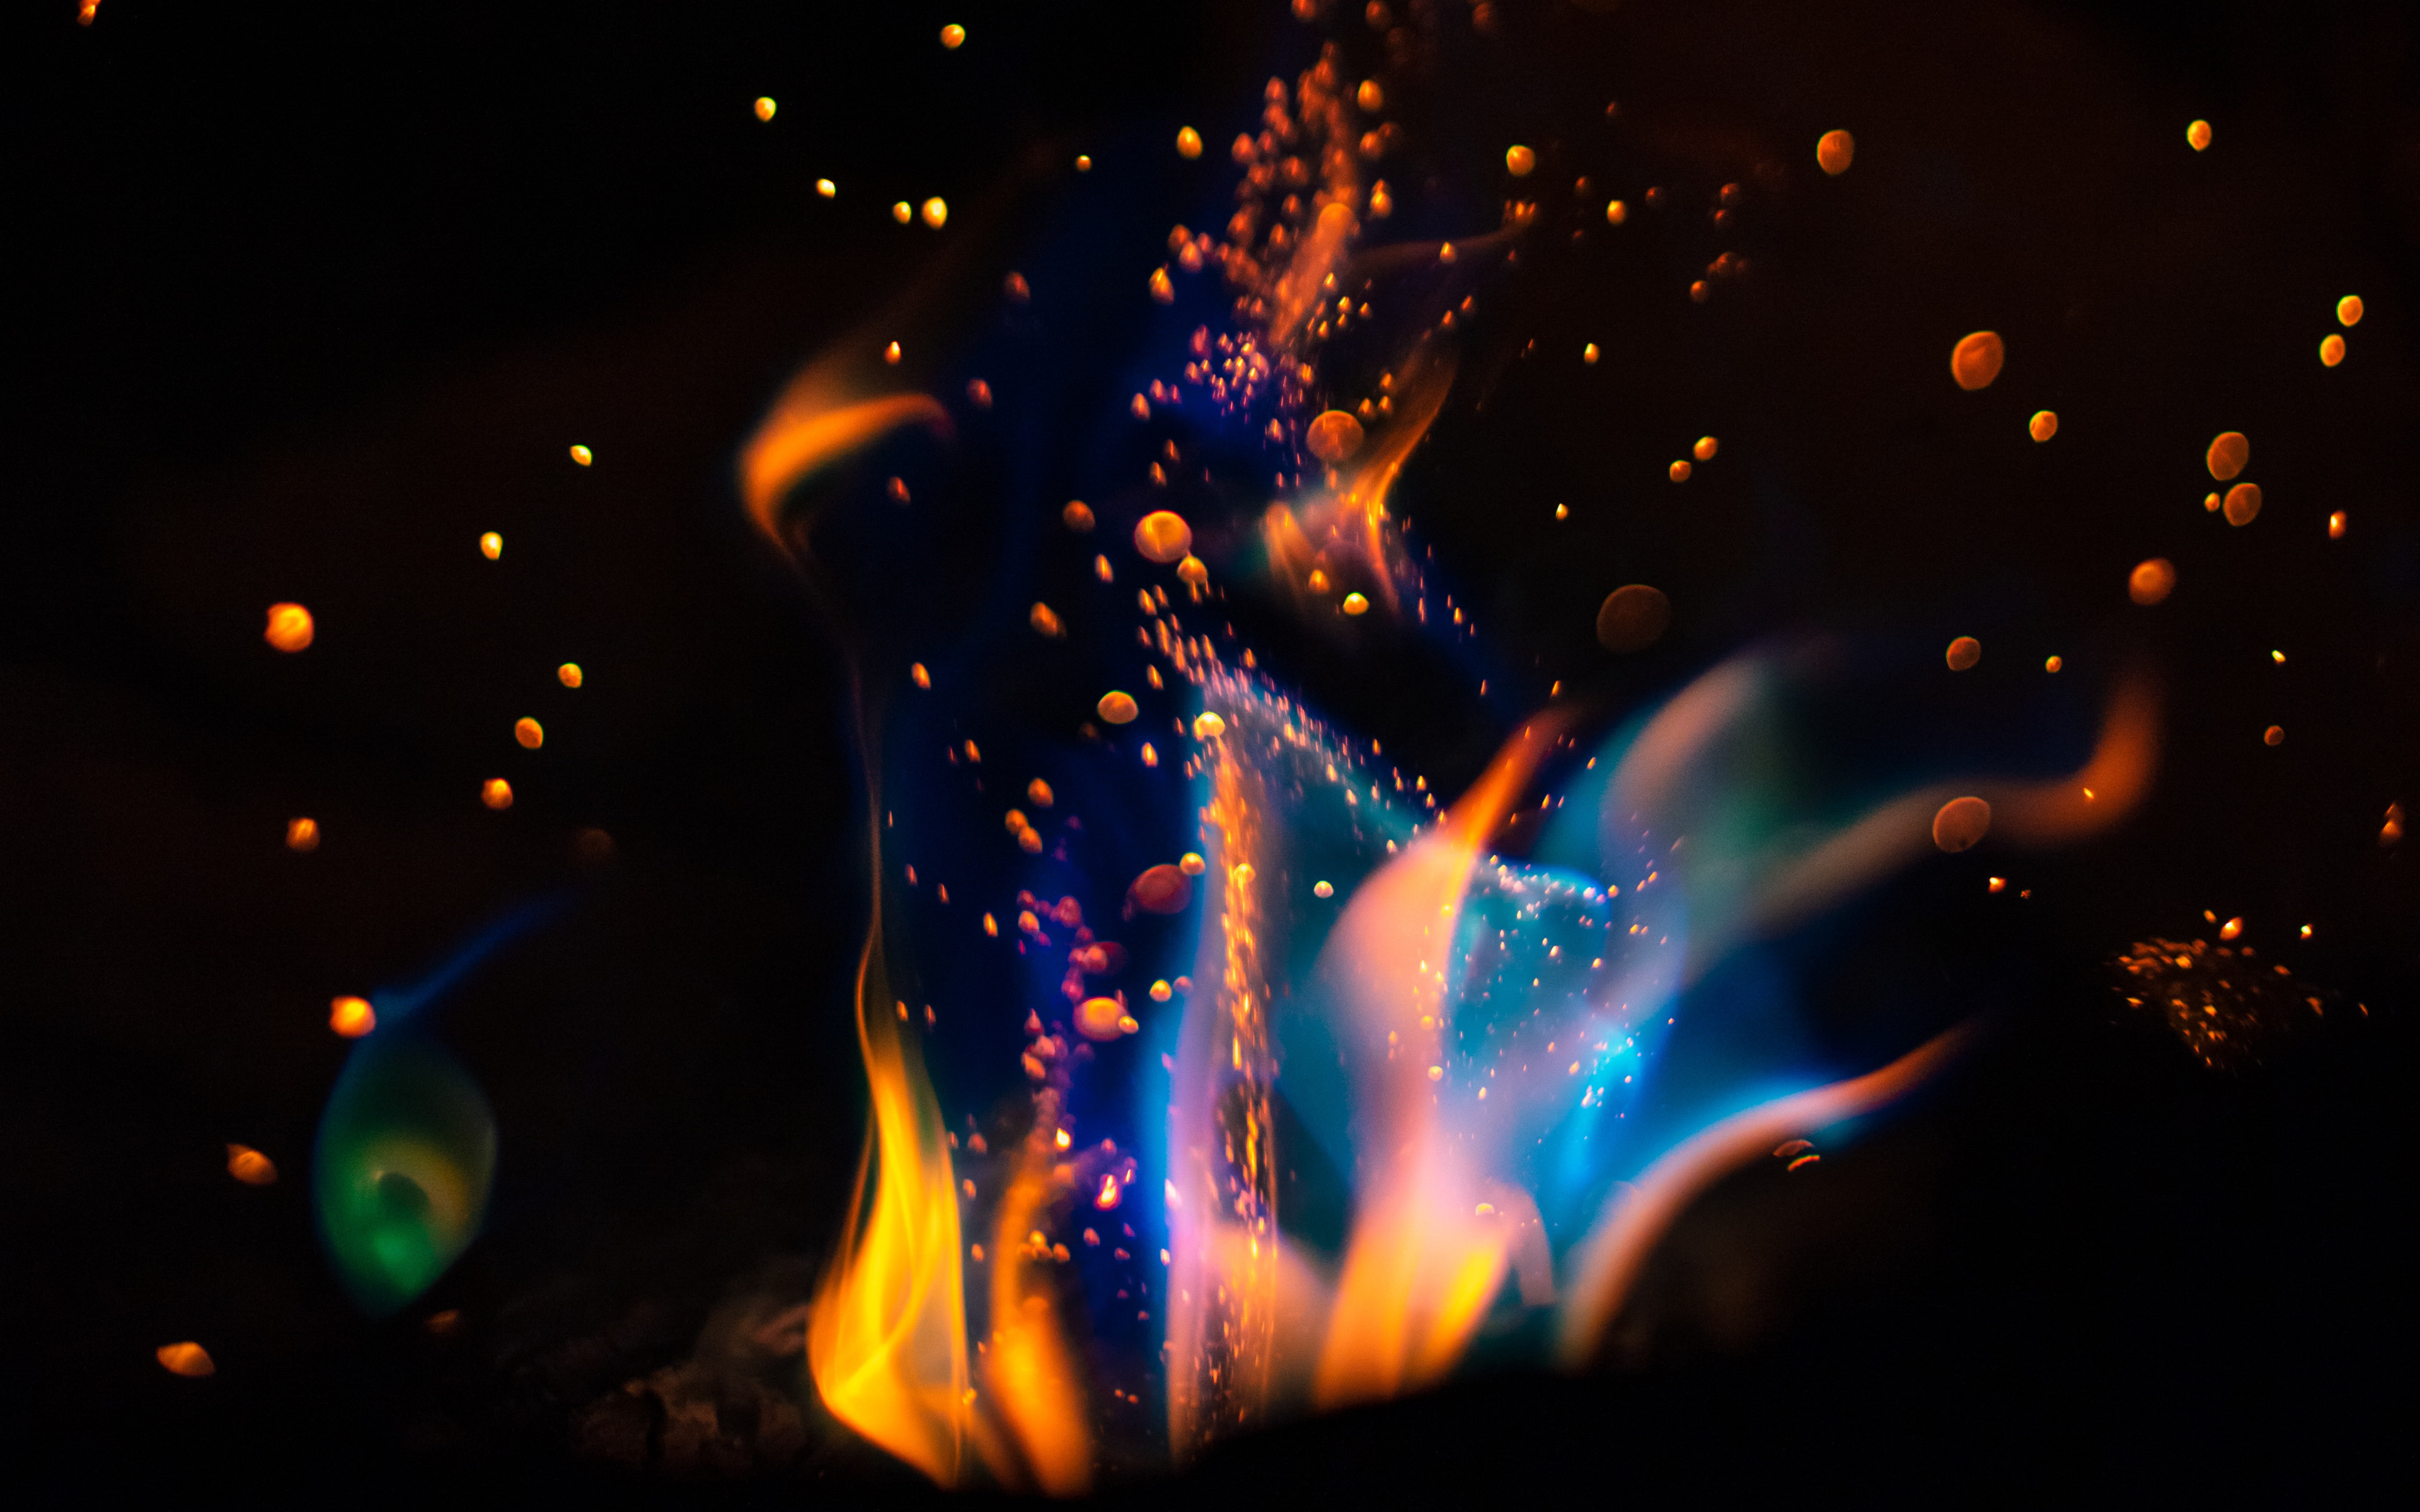 Hot flames in darkness wallpaper 3840x2400